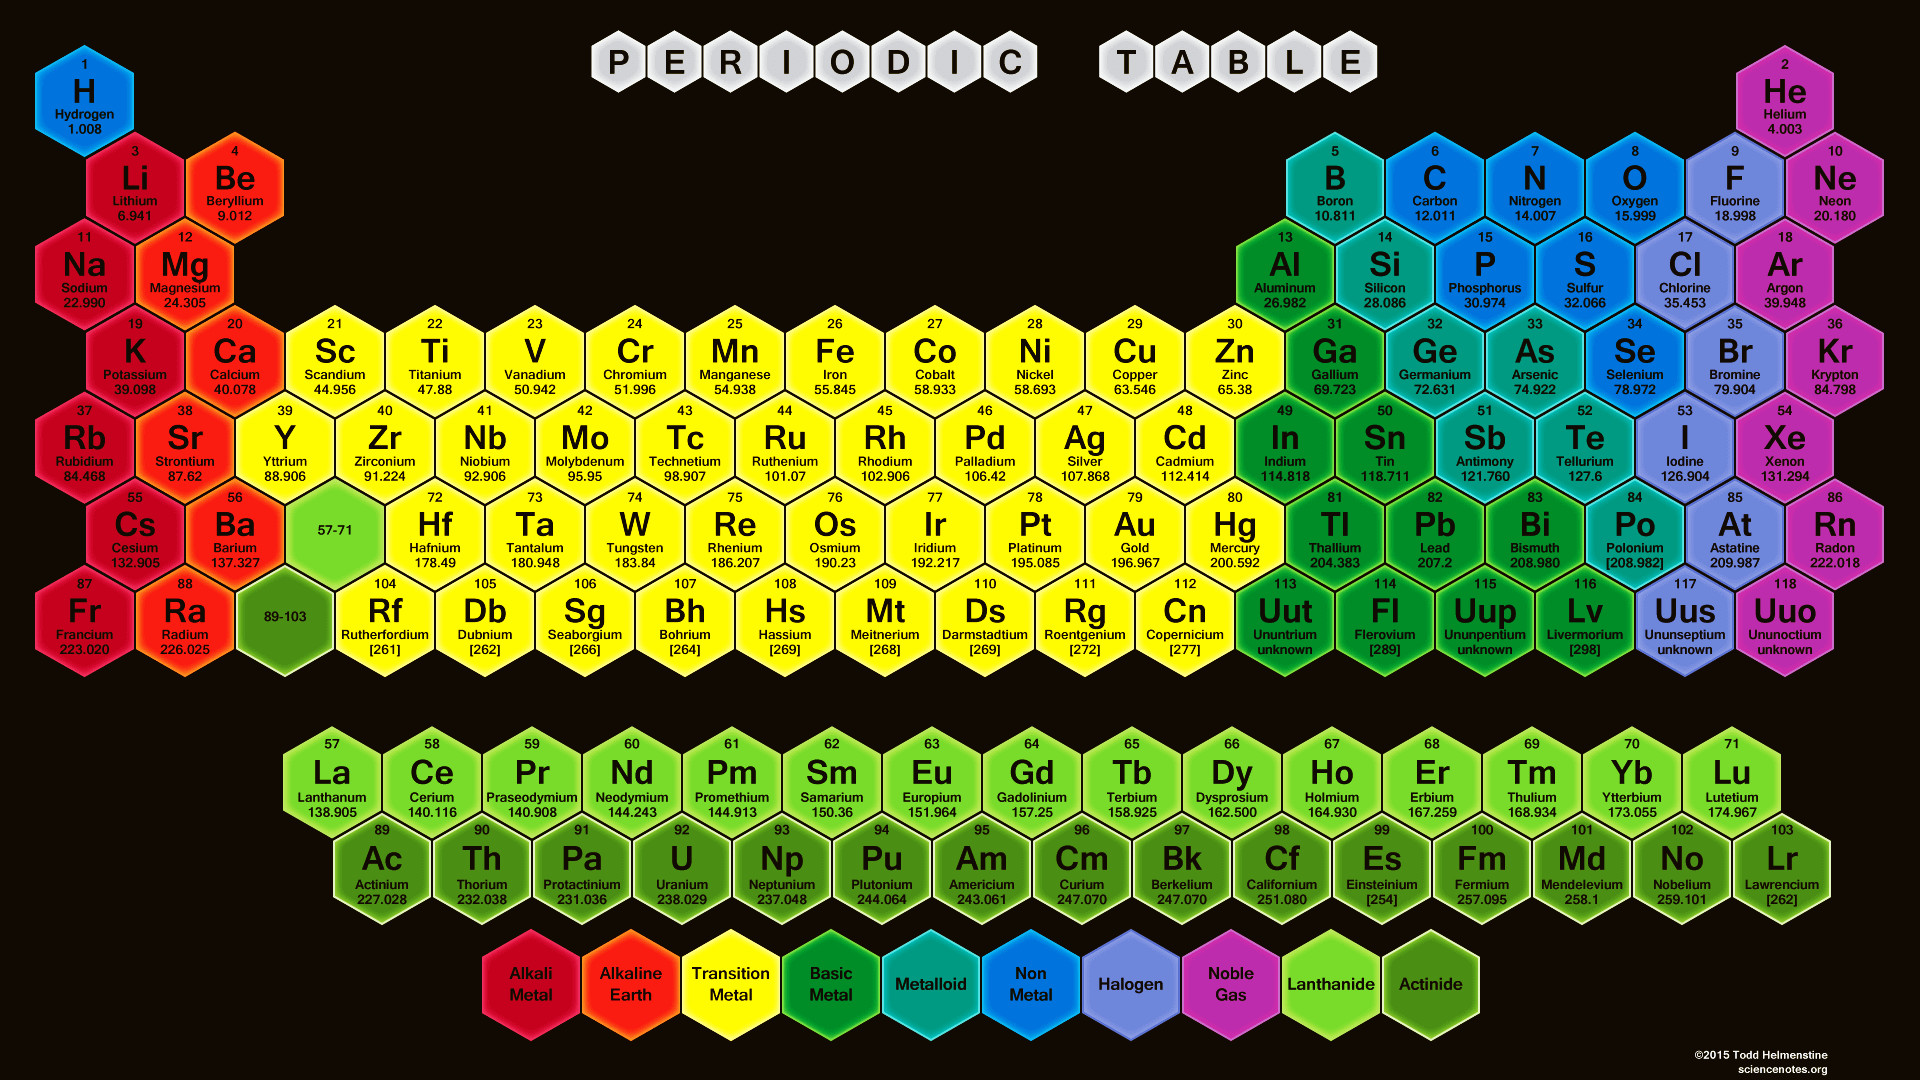 Color Hexagon Periodic Table Wallpaper